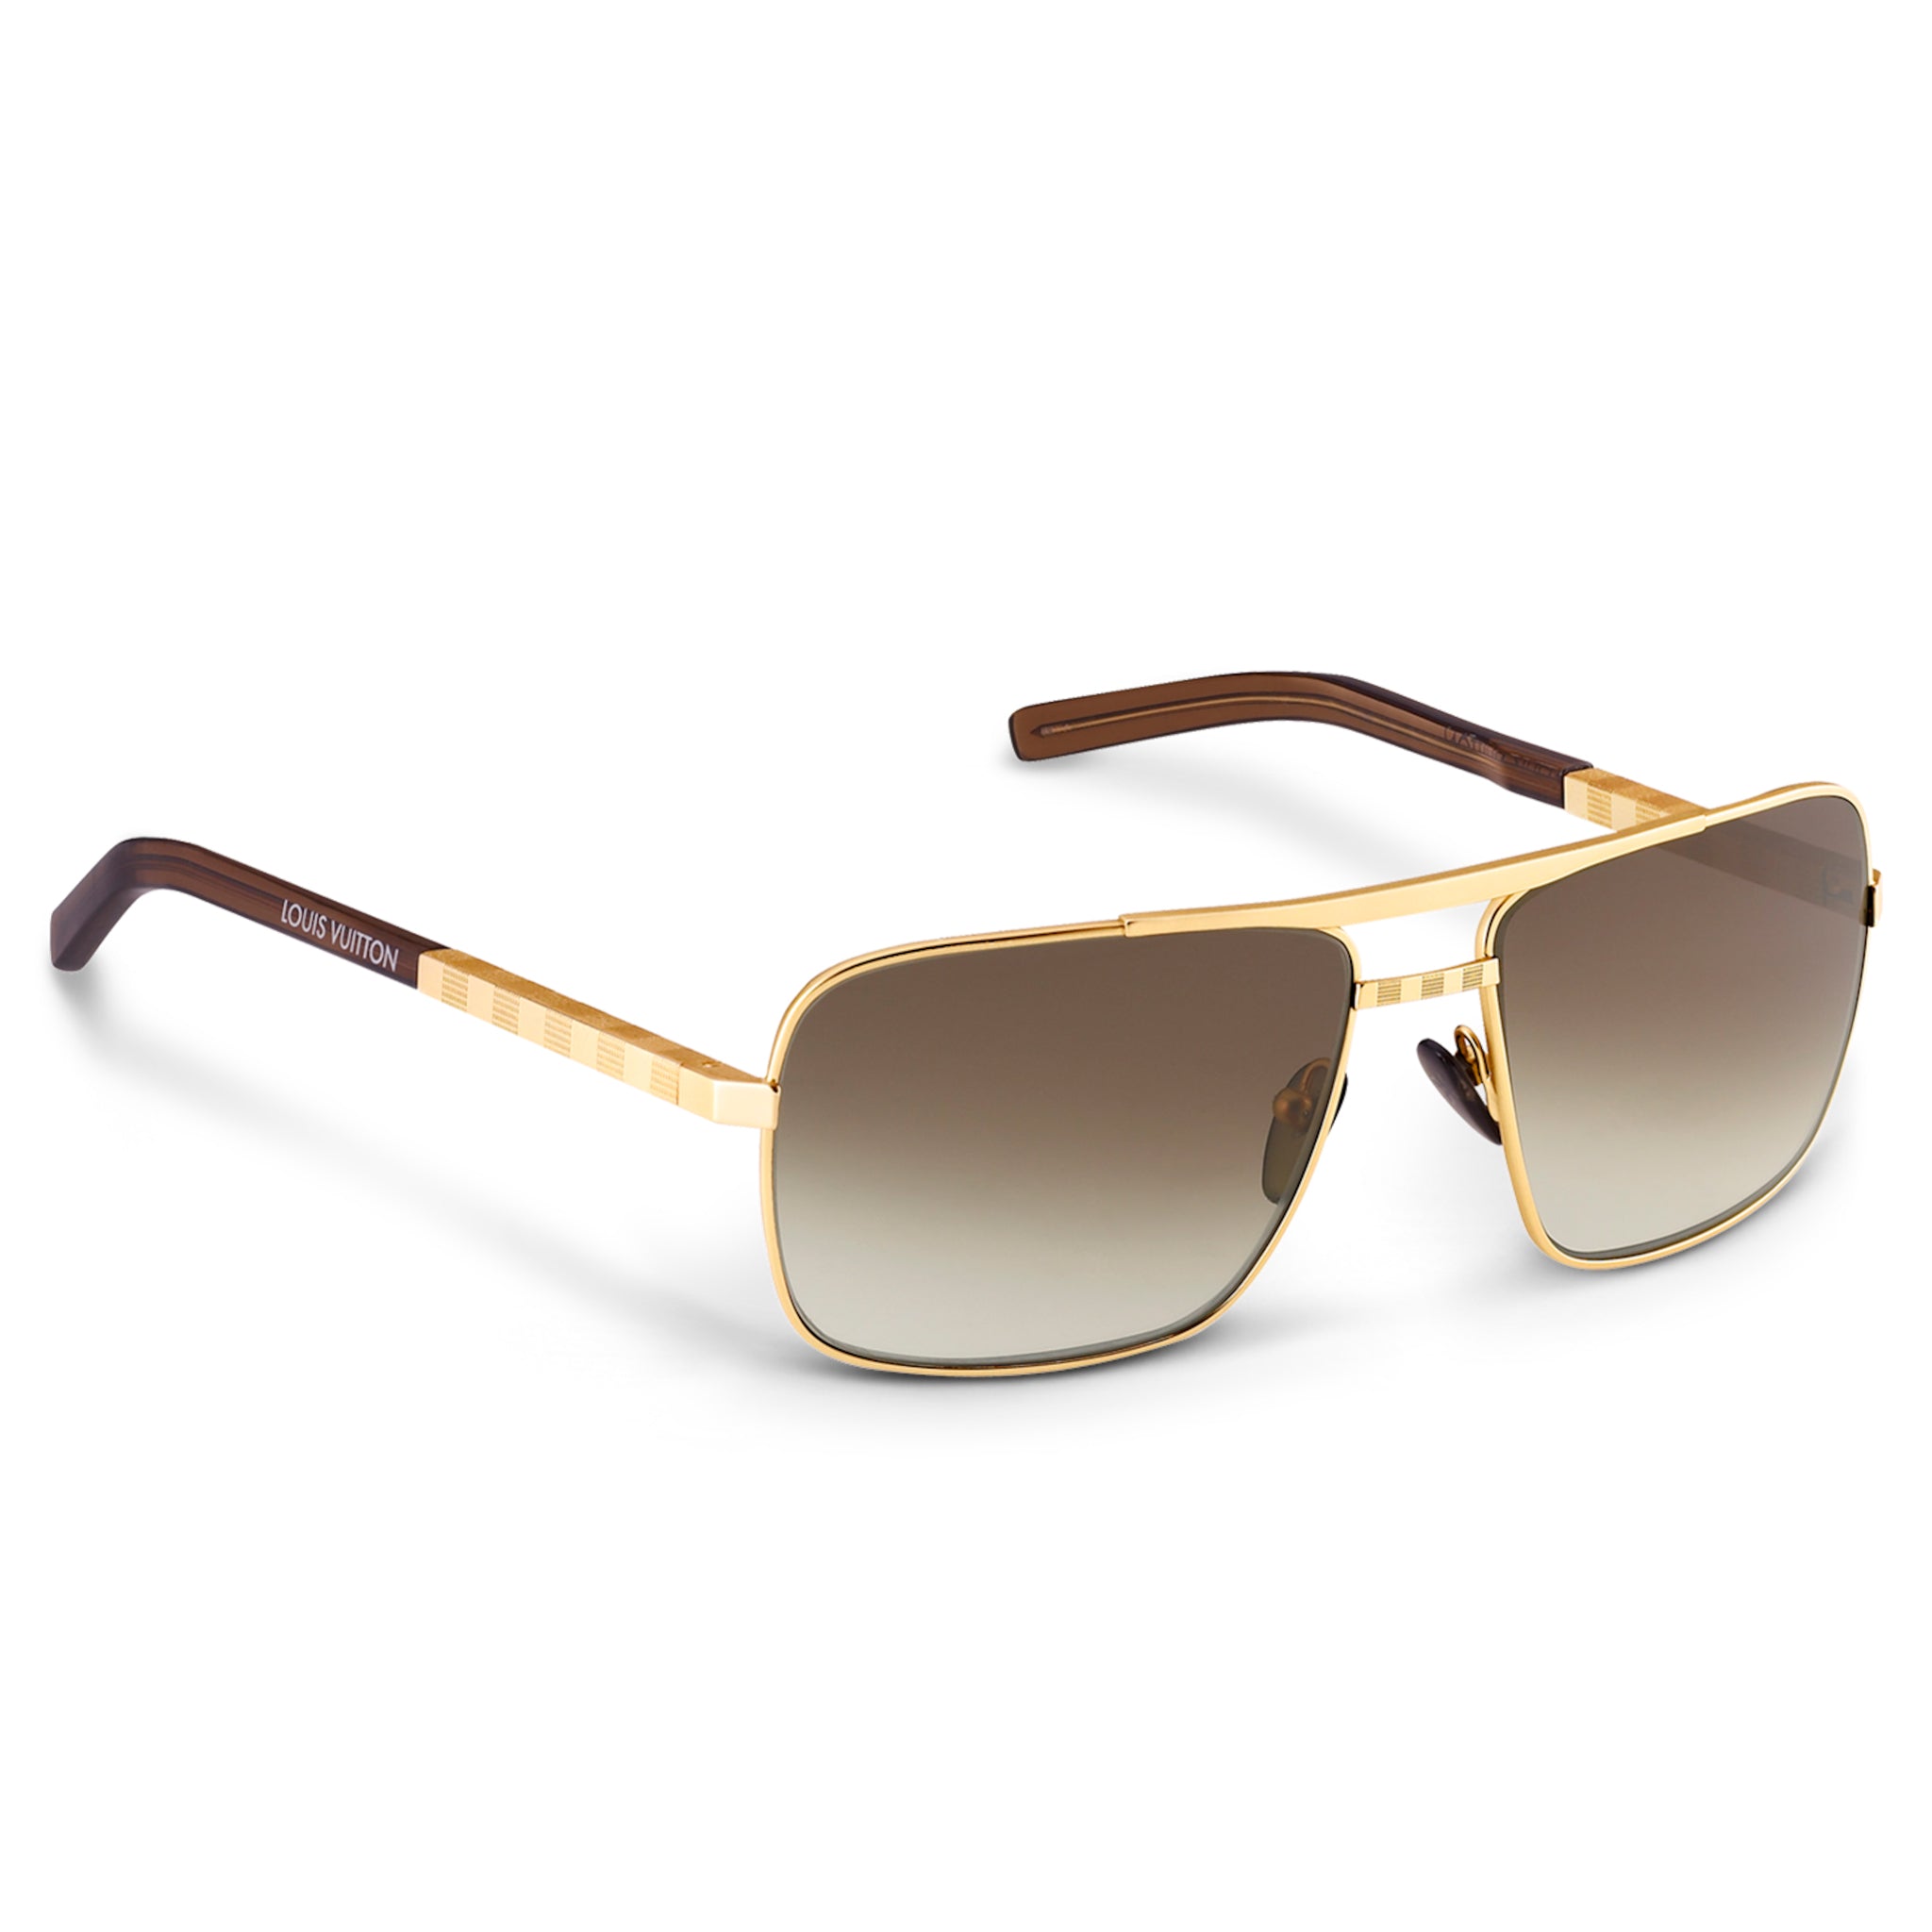 Louis Vuitton Attitude Gold Sunglasses – Cheap Willardmarine Jordan outlet